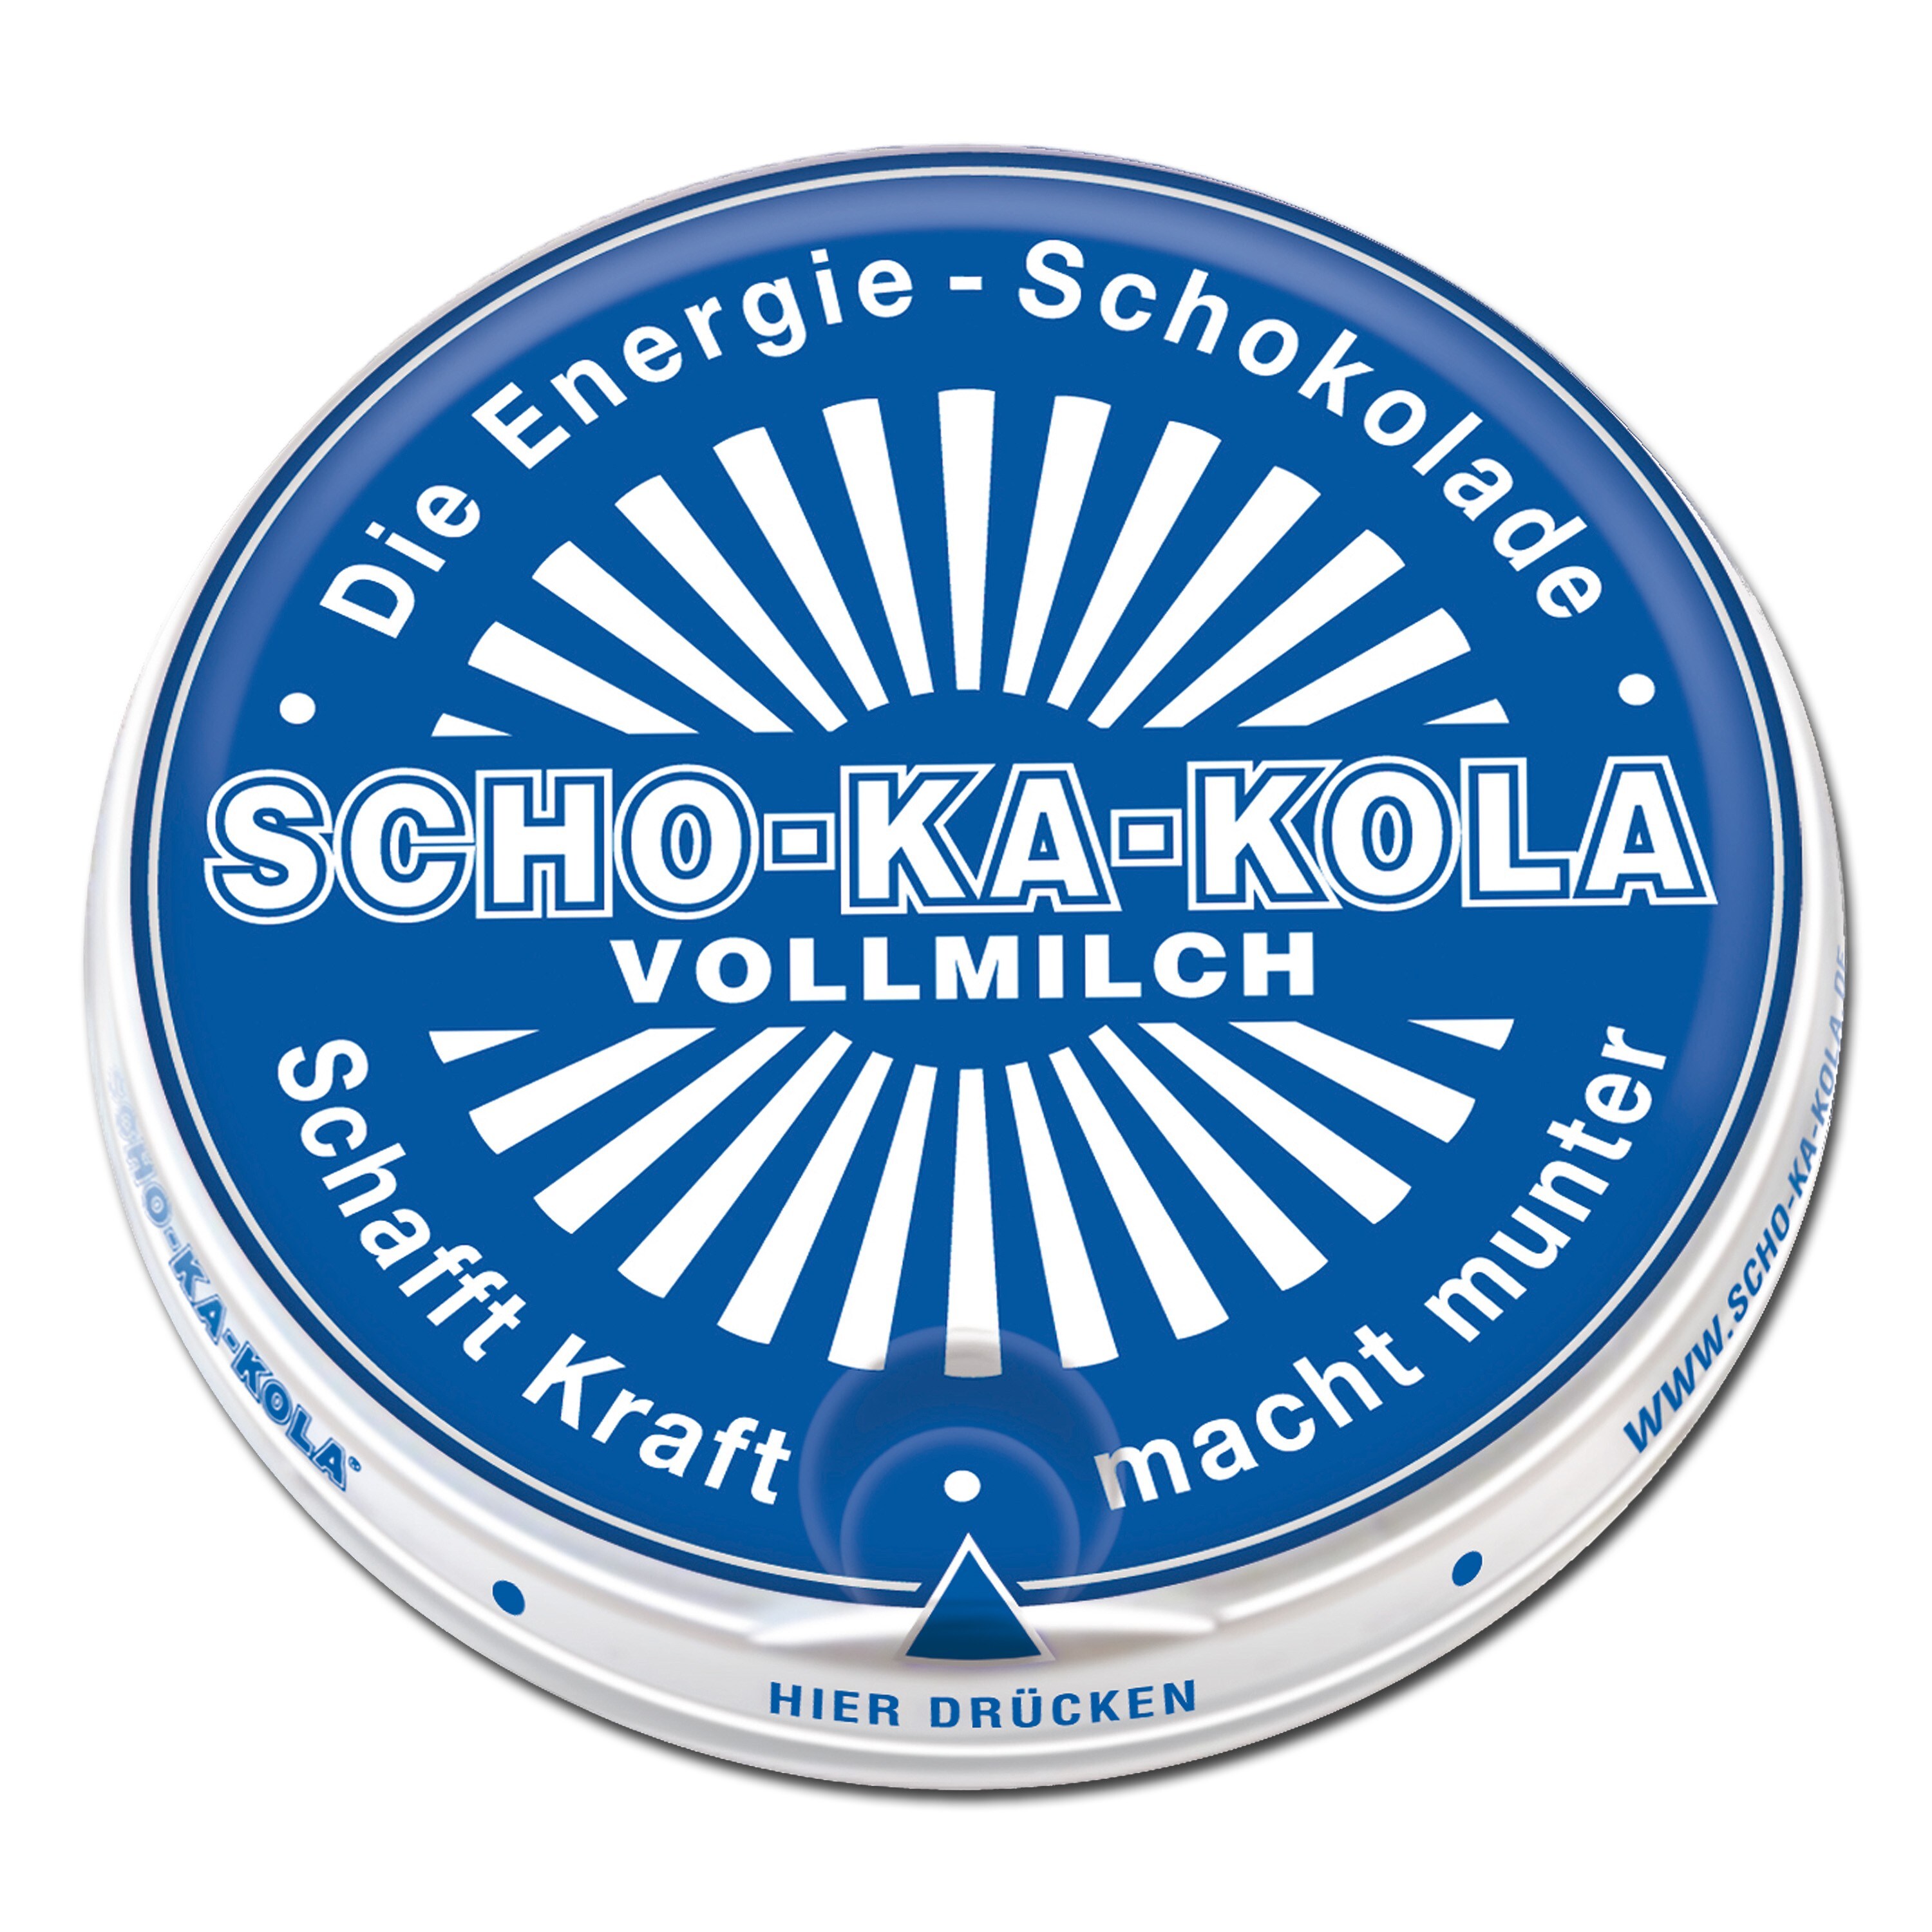 German Energy Milk Chocolate SCHO-KA-KOLA whole milk 100 g tin can blue 